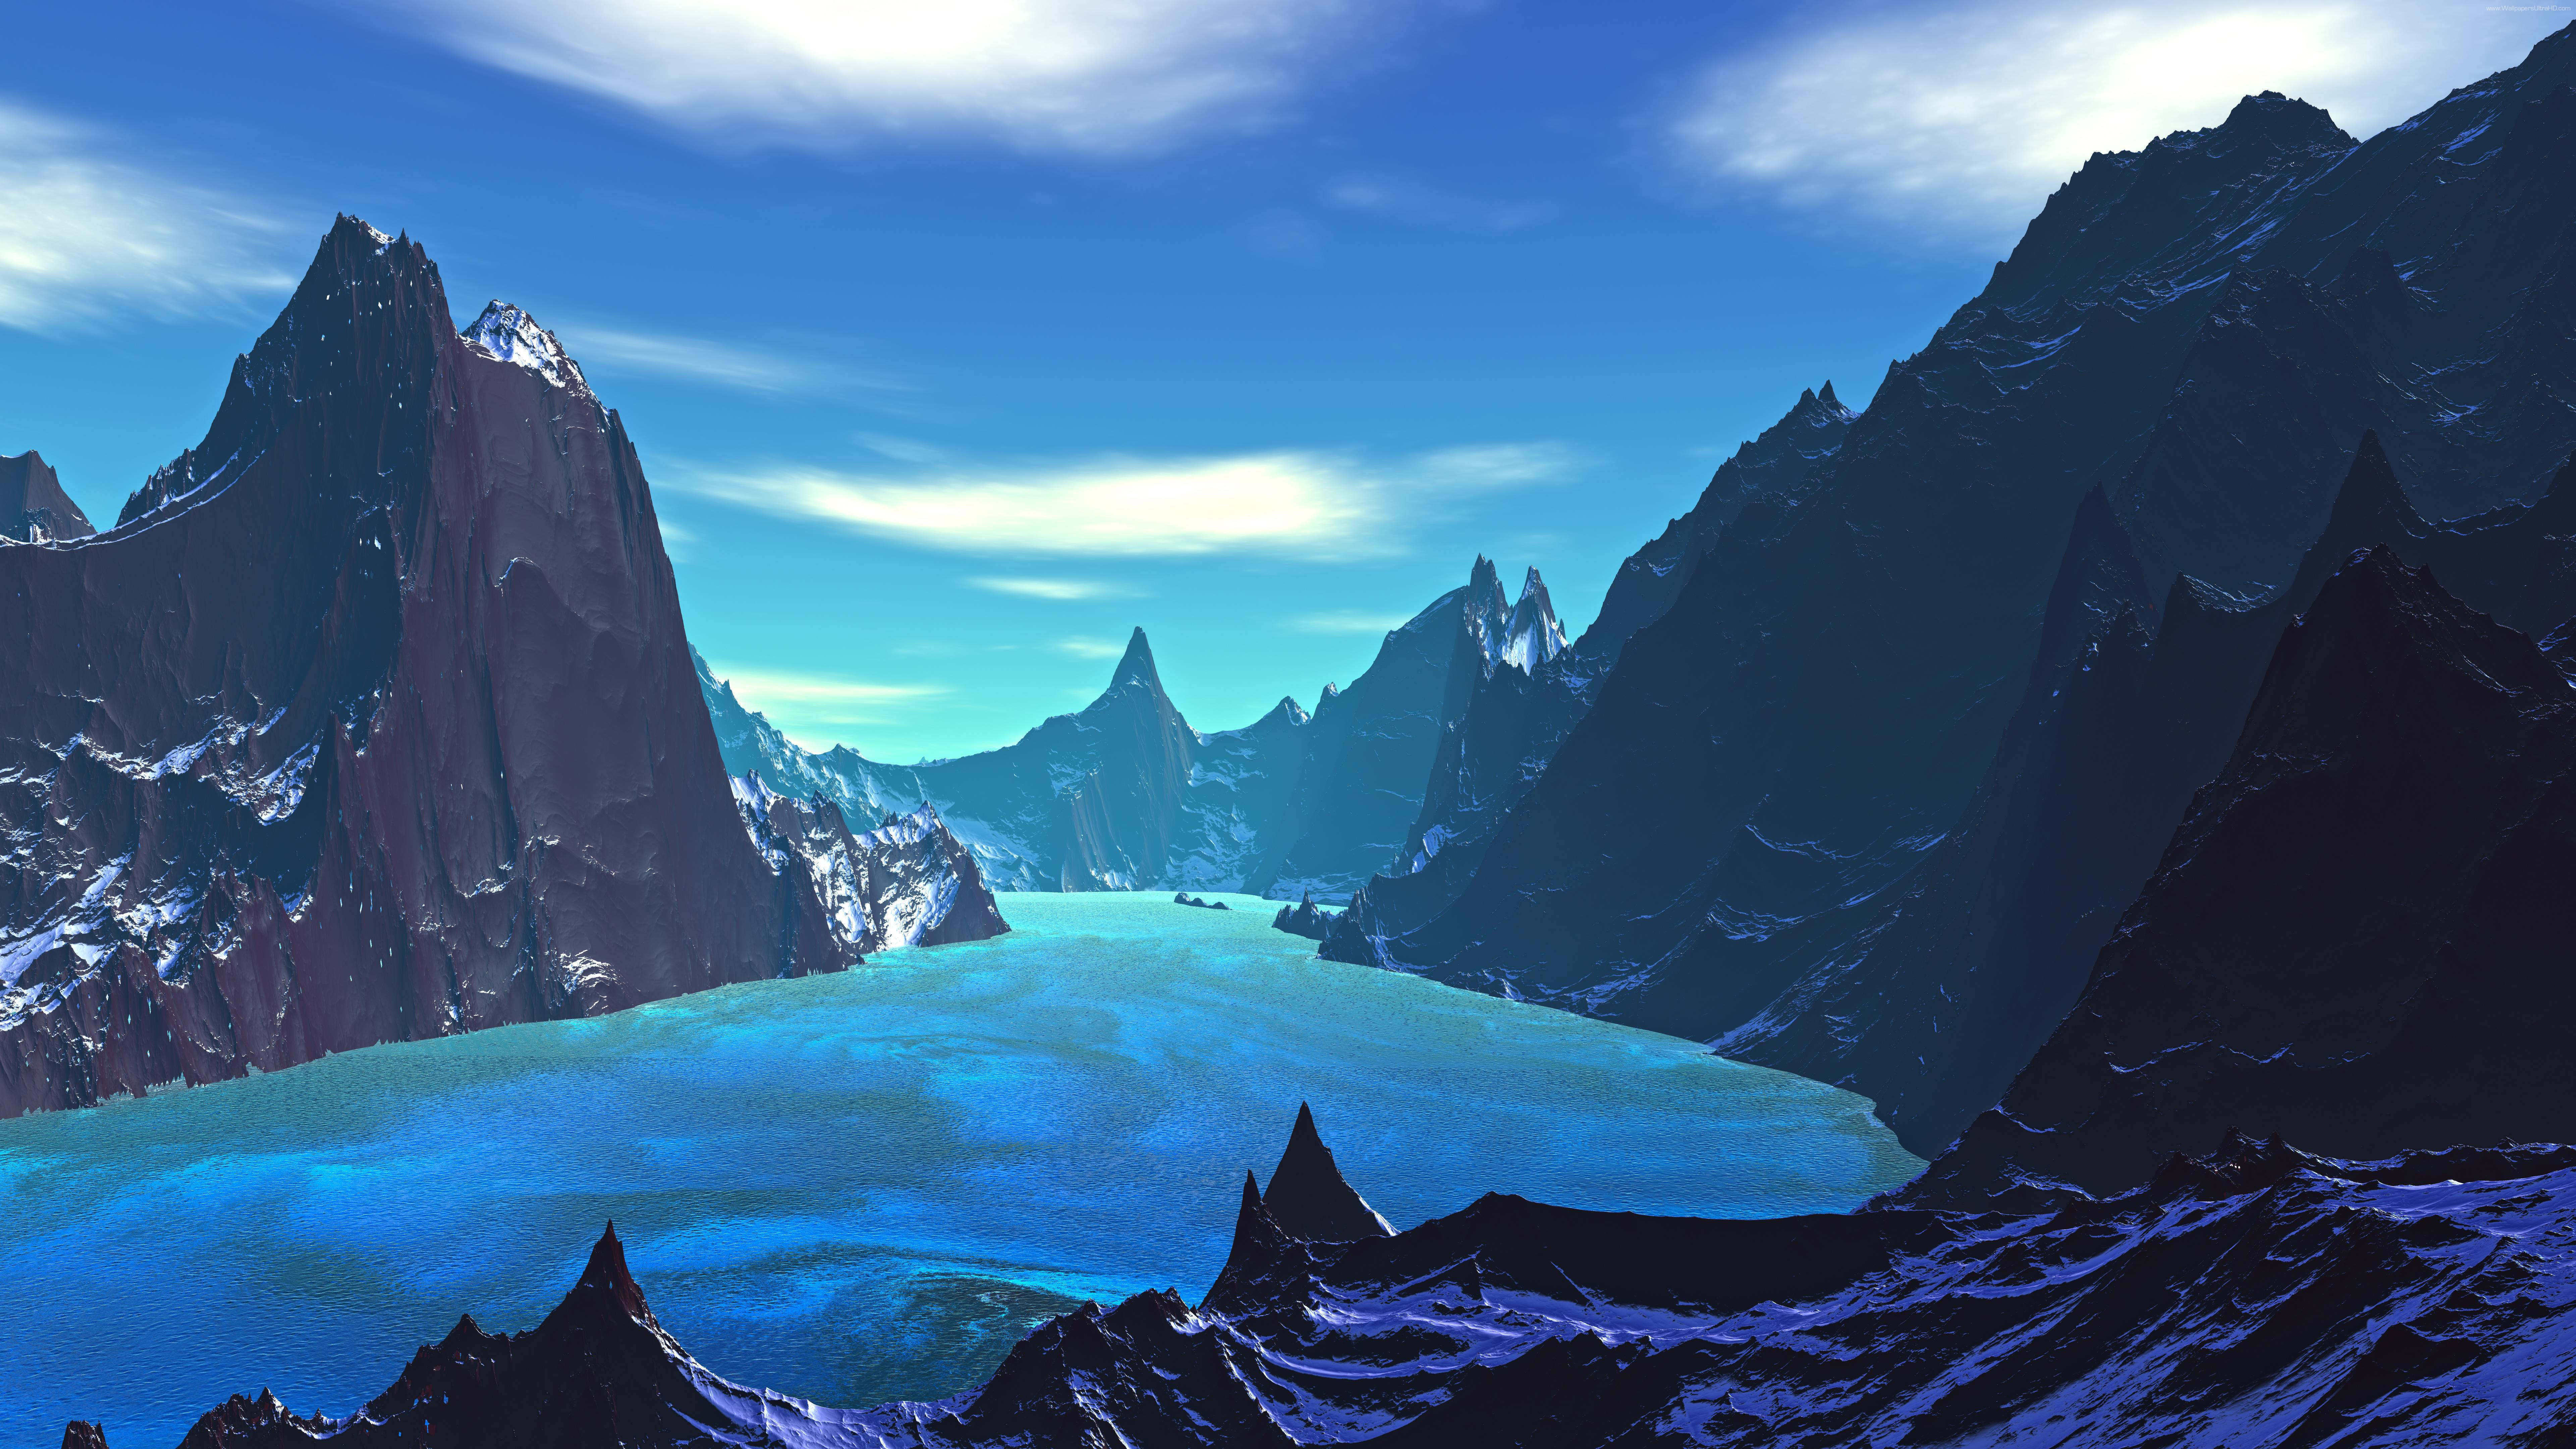 HD wallpaper: mountain blue lake ultra hd 8k 7680x4320, scenics - nature